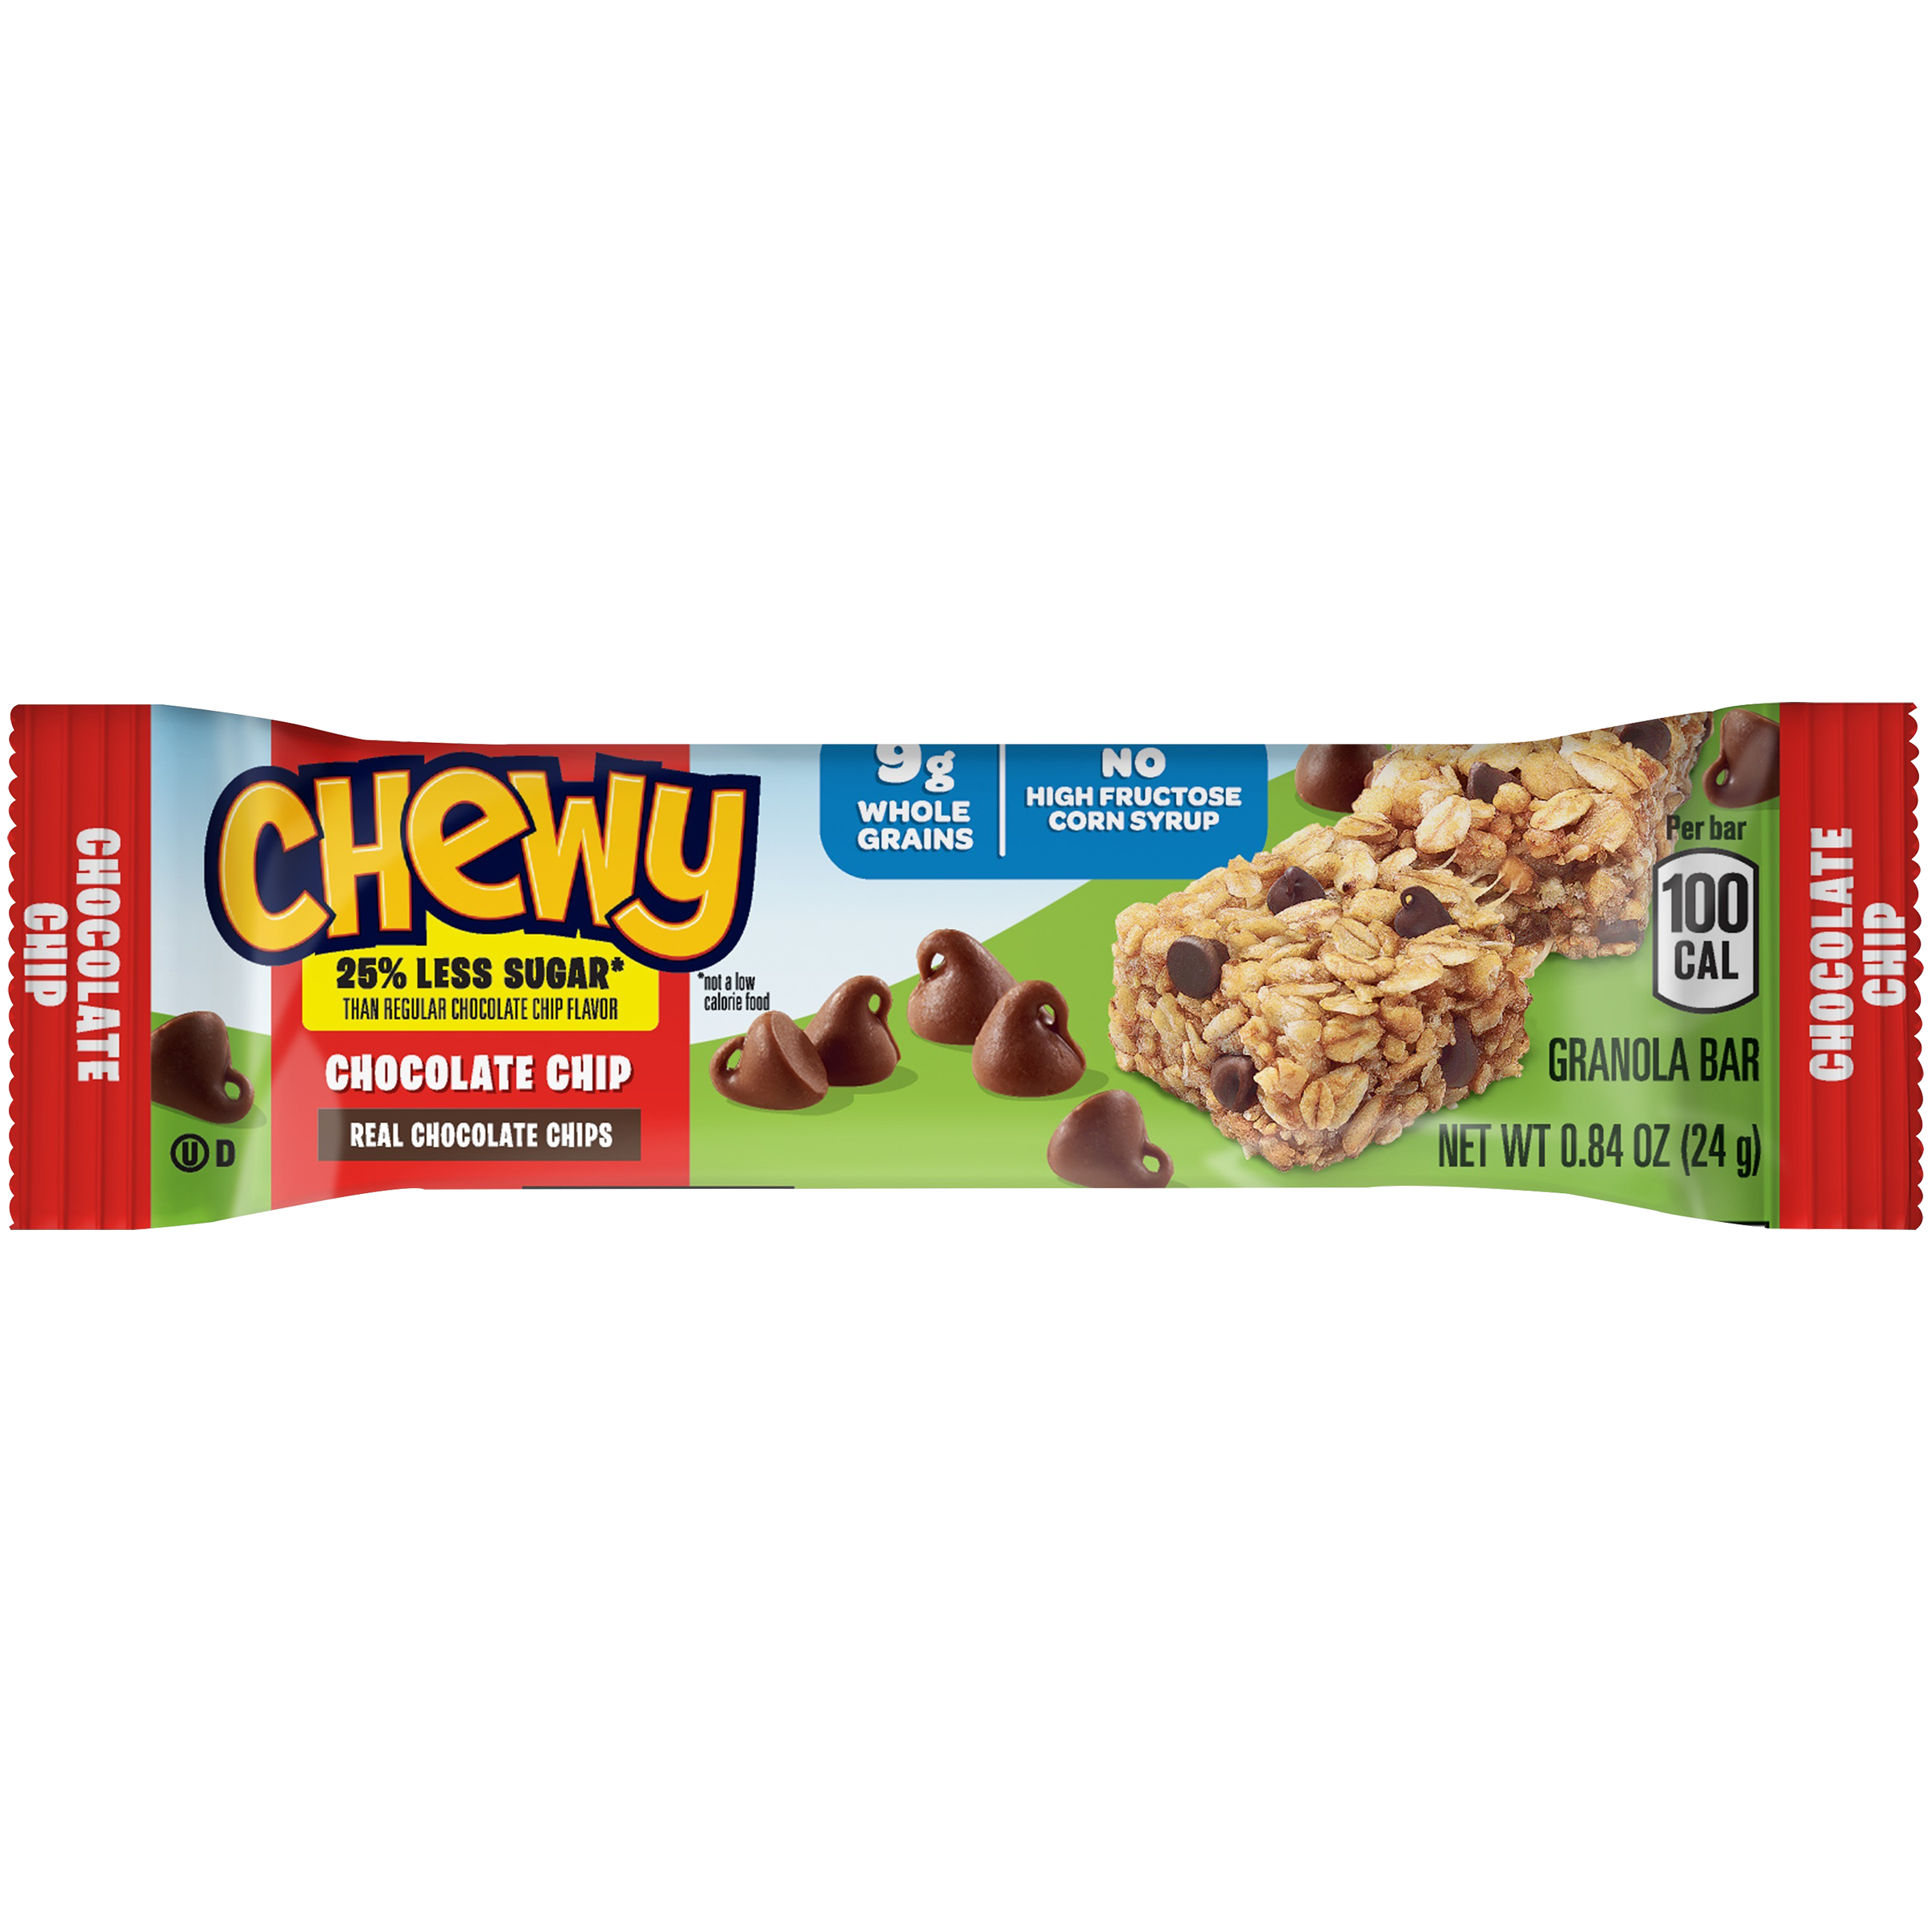 quaker granola bars nutrition